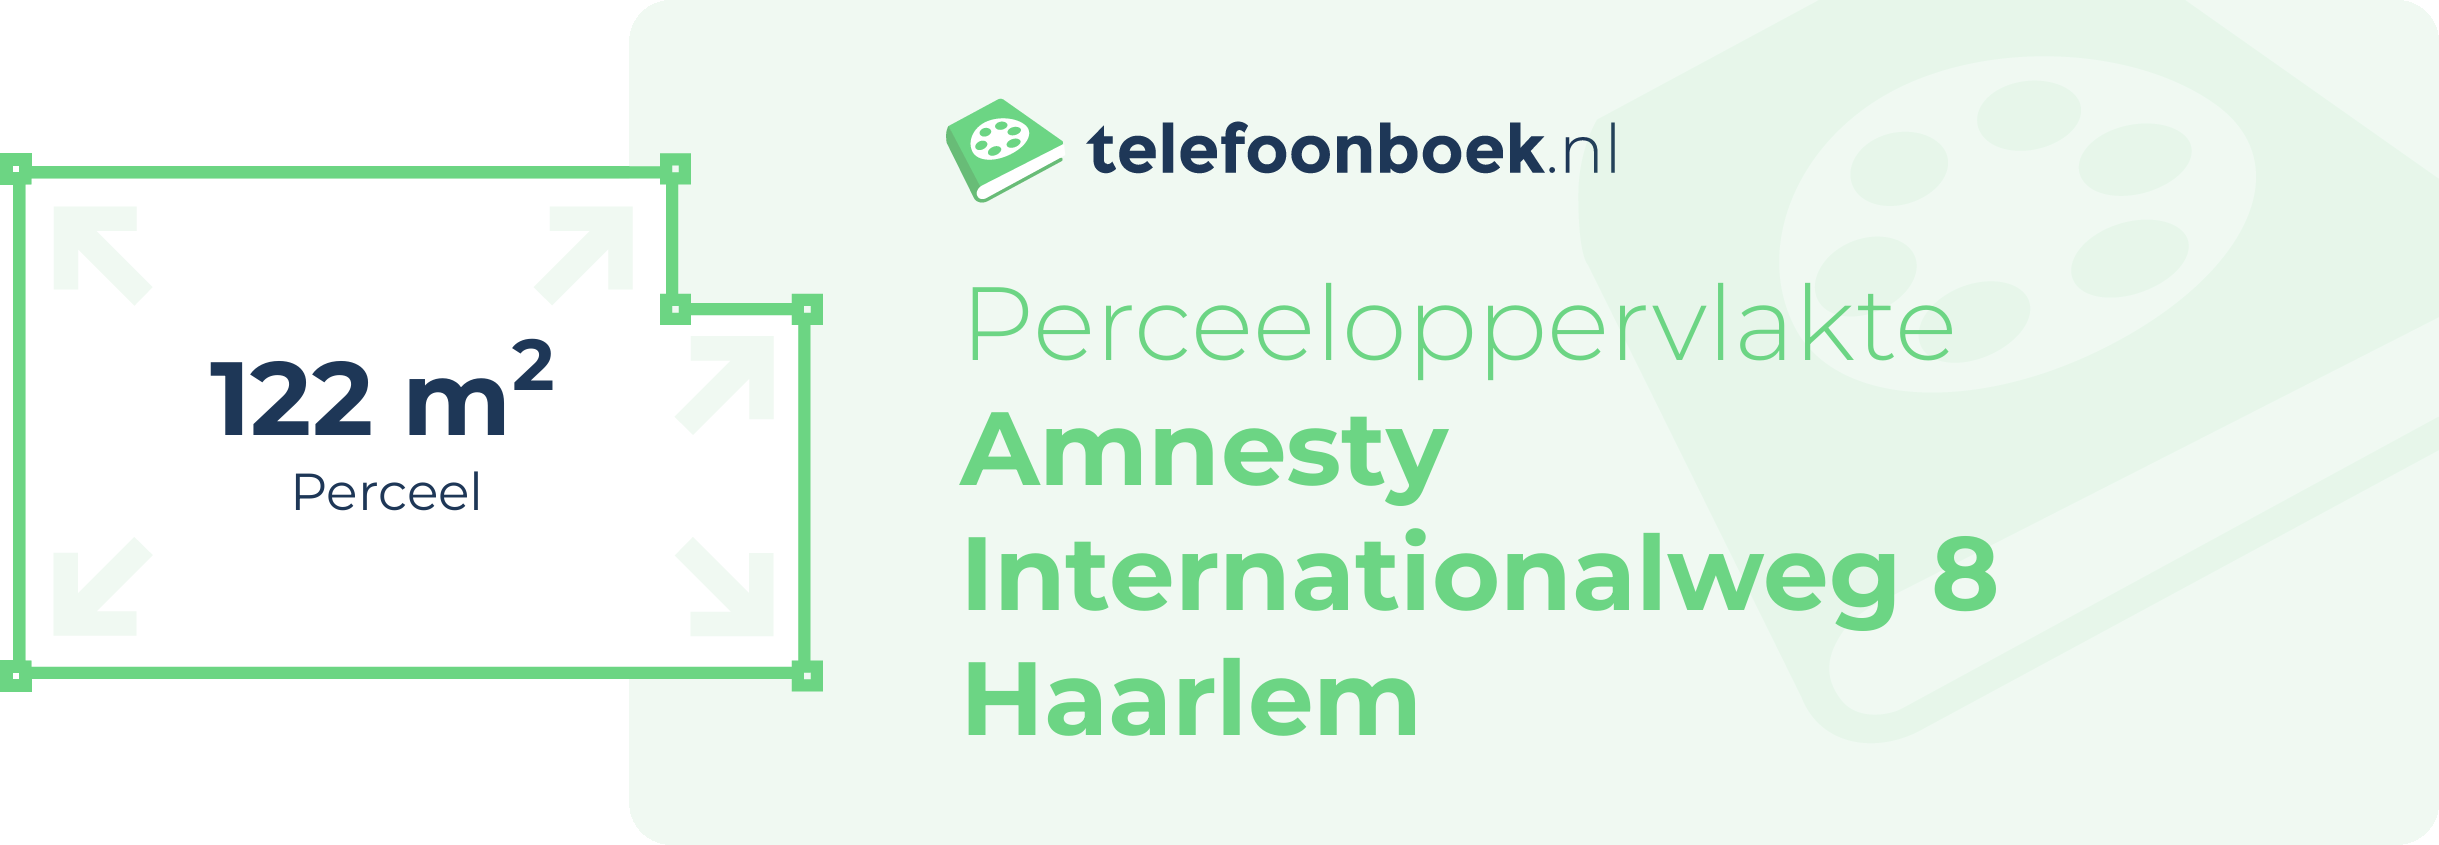 Perceeloppervlakte Amnesty Internationalweg 8 Haarlem